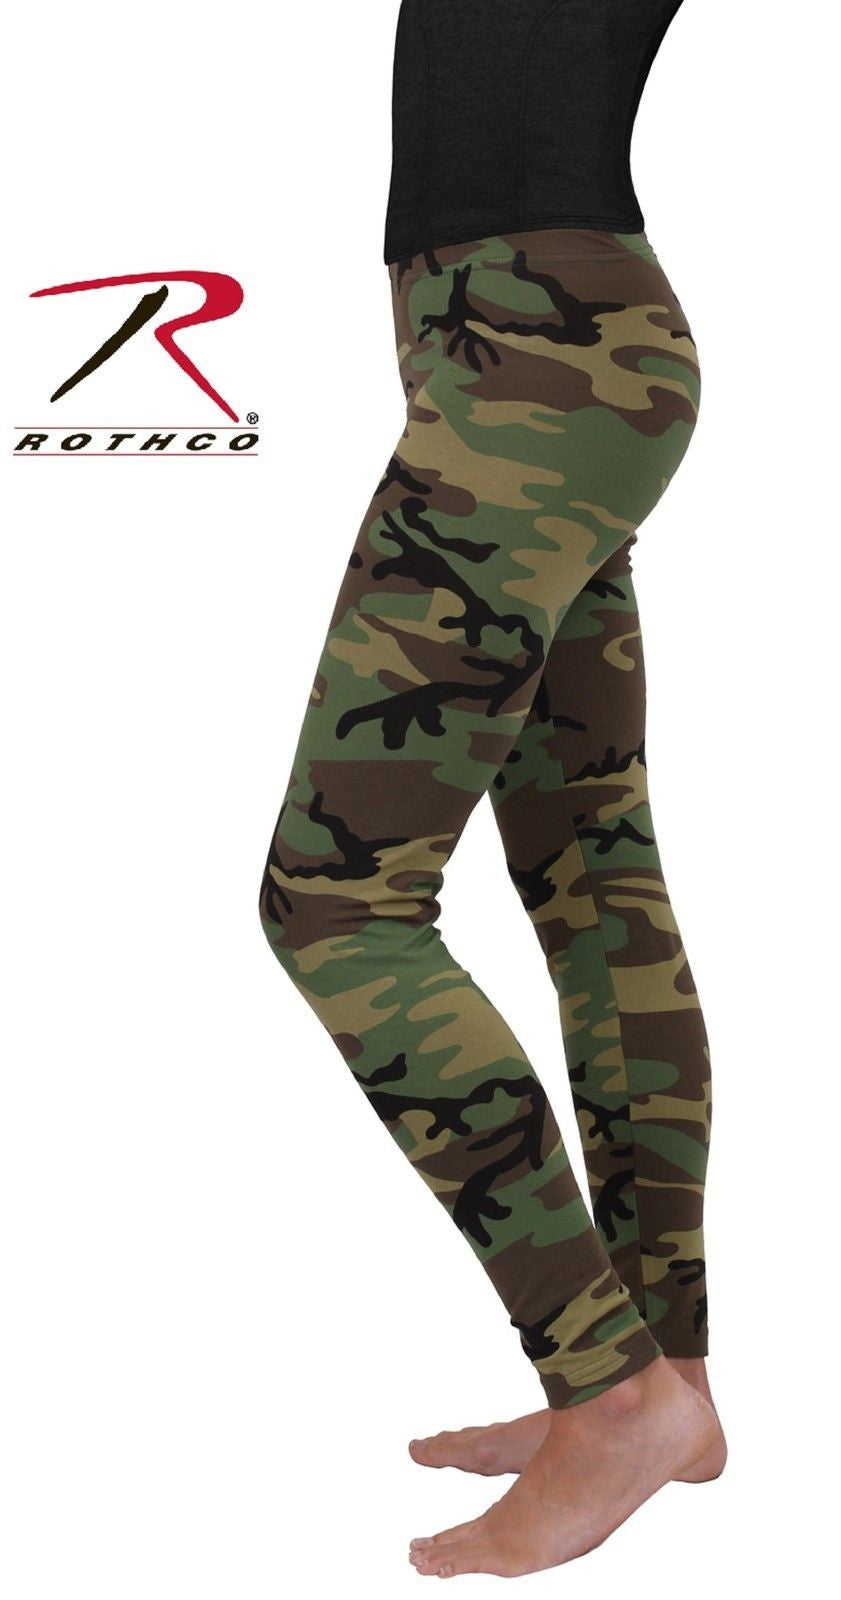 Womens Camouflage Leggings - Snug Cotton Spandex Classic Camo Legging Pants